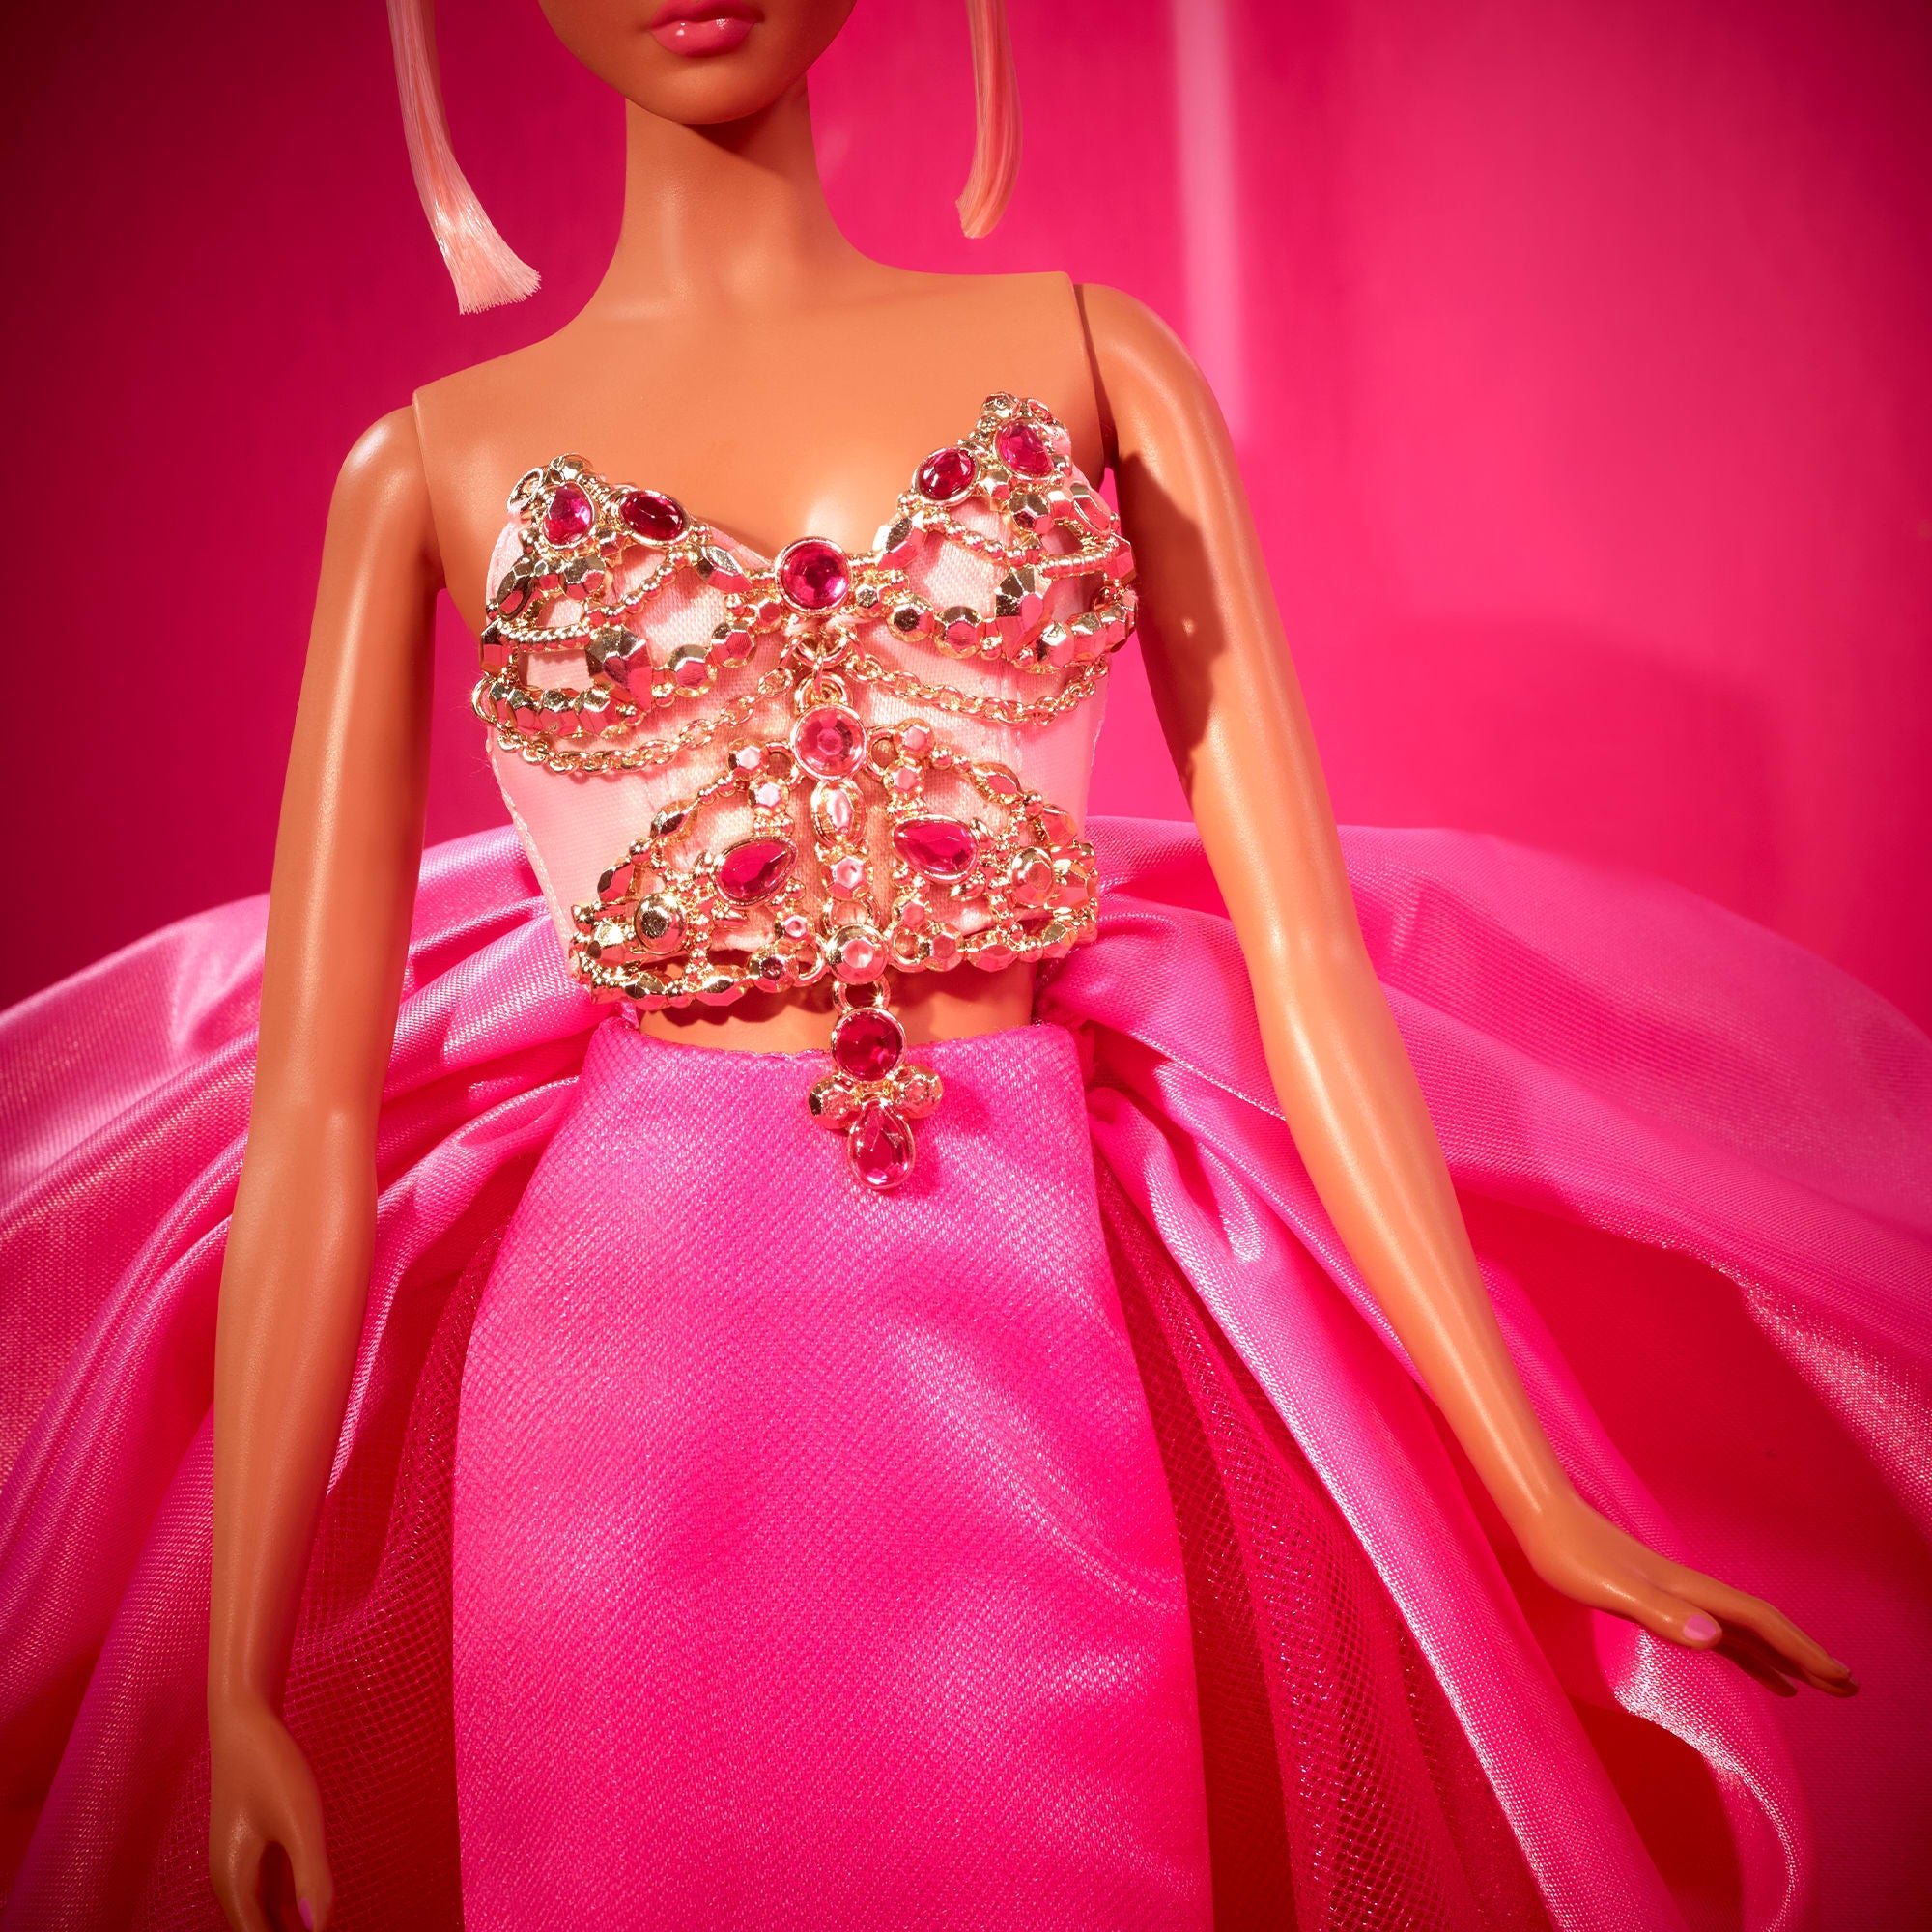 Barbie & The Rockers fashion hot Pink Disco Leggings Pants💿 Free US  Shipping 💿